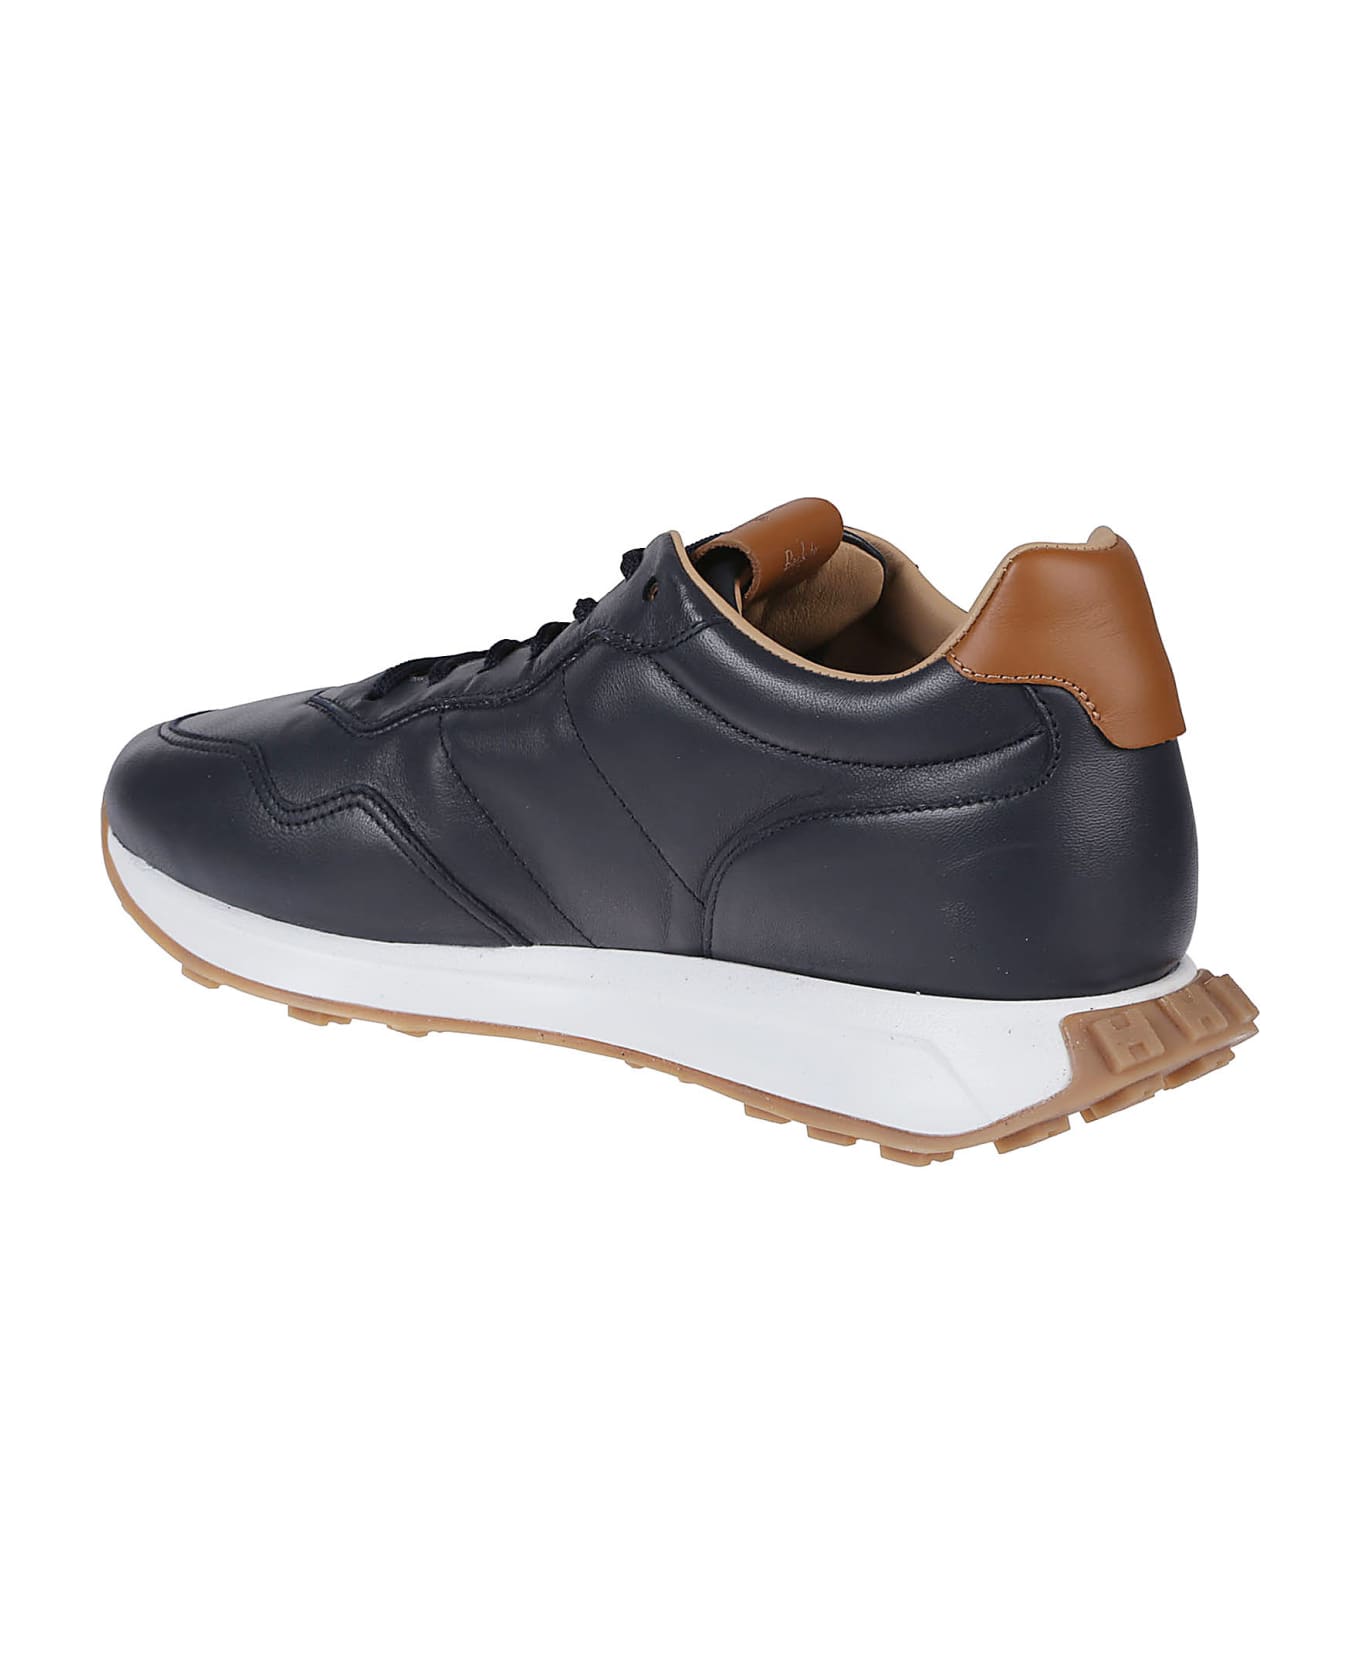 Hogan H601 Sneakers - Notte/kenia Scuro